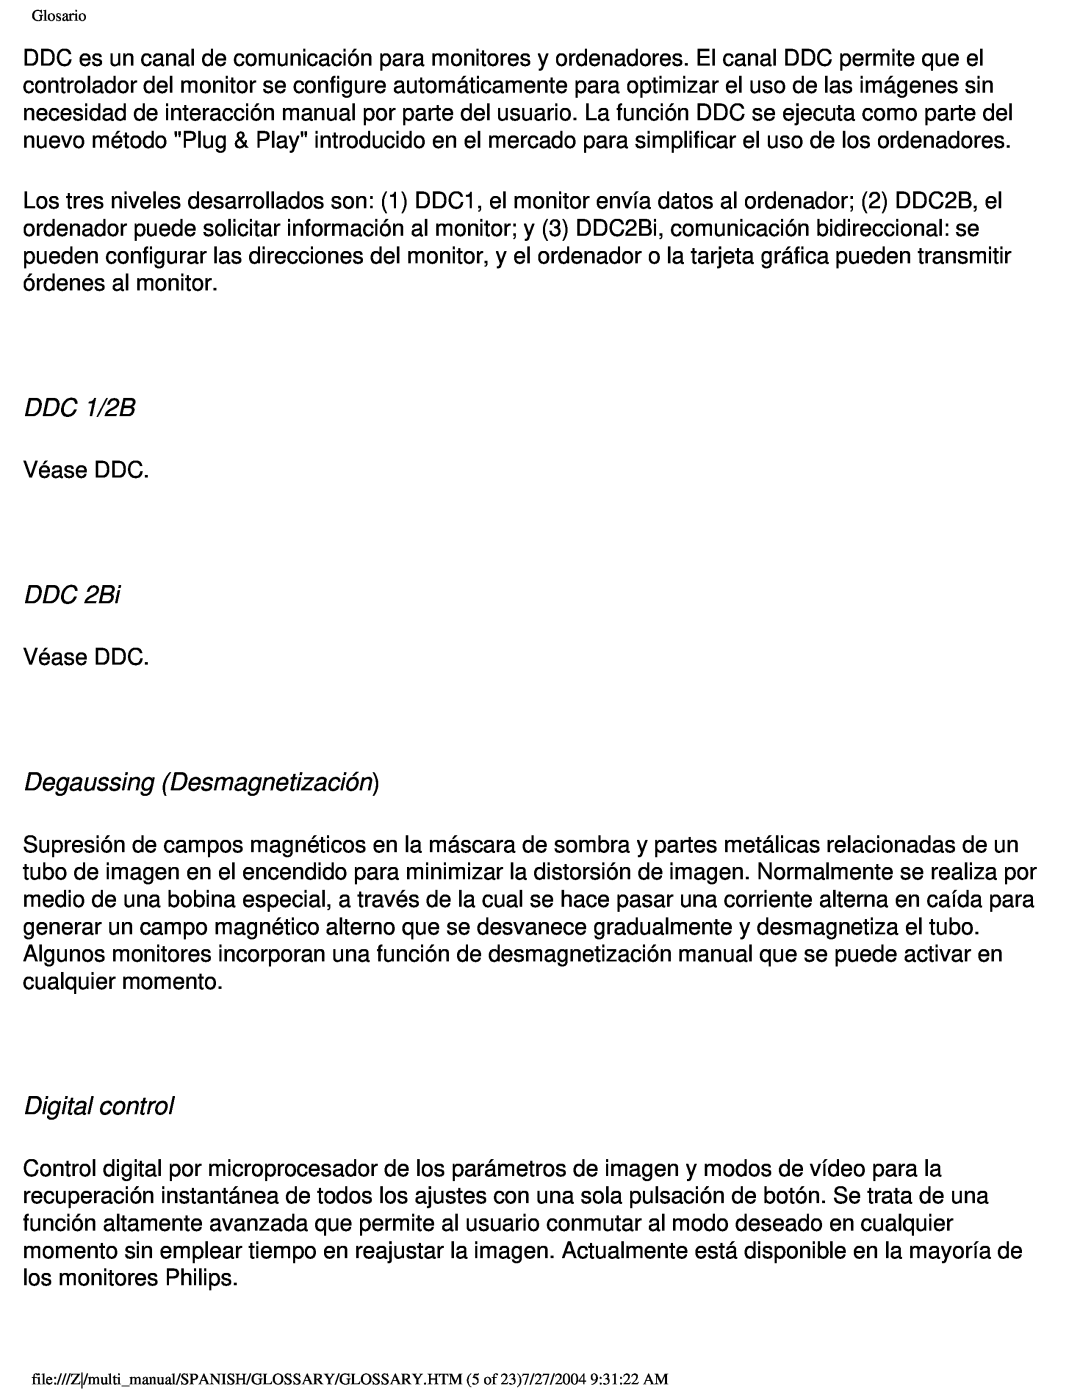 Philips 107B user manual DDC 1/2B, DDC 2Bi, Degaussing Desmagnetización, Digital control 